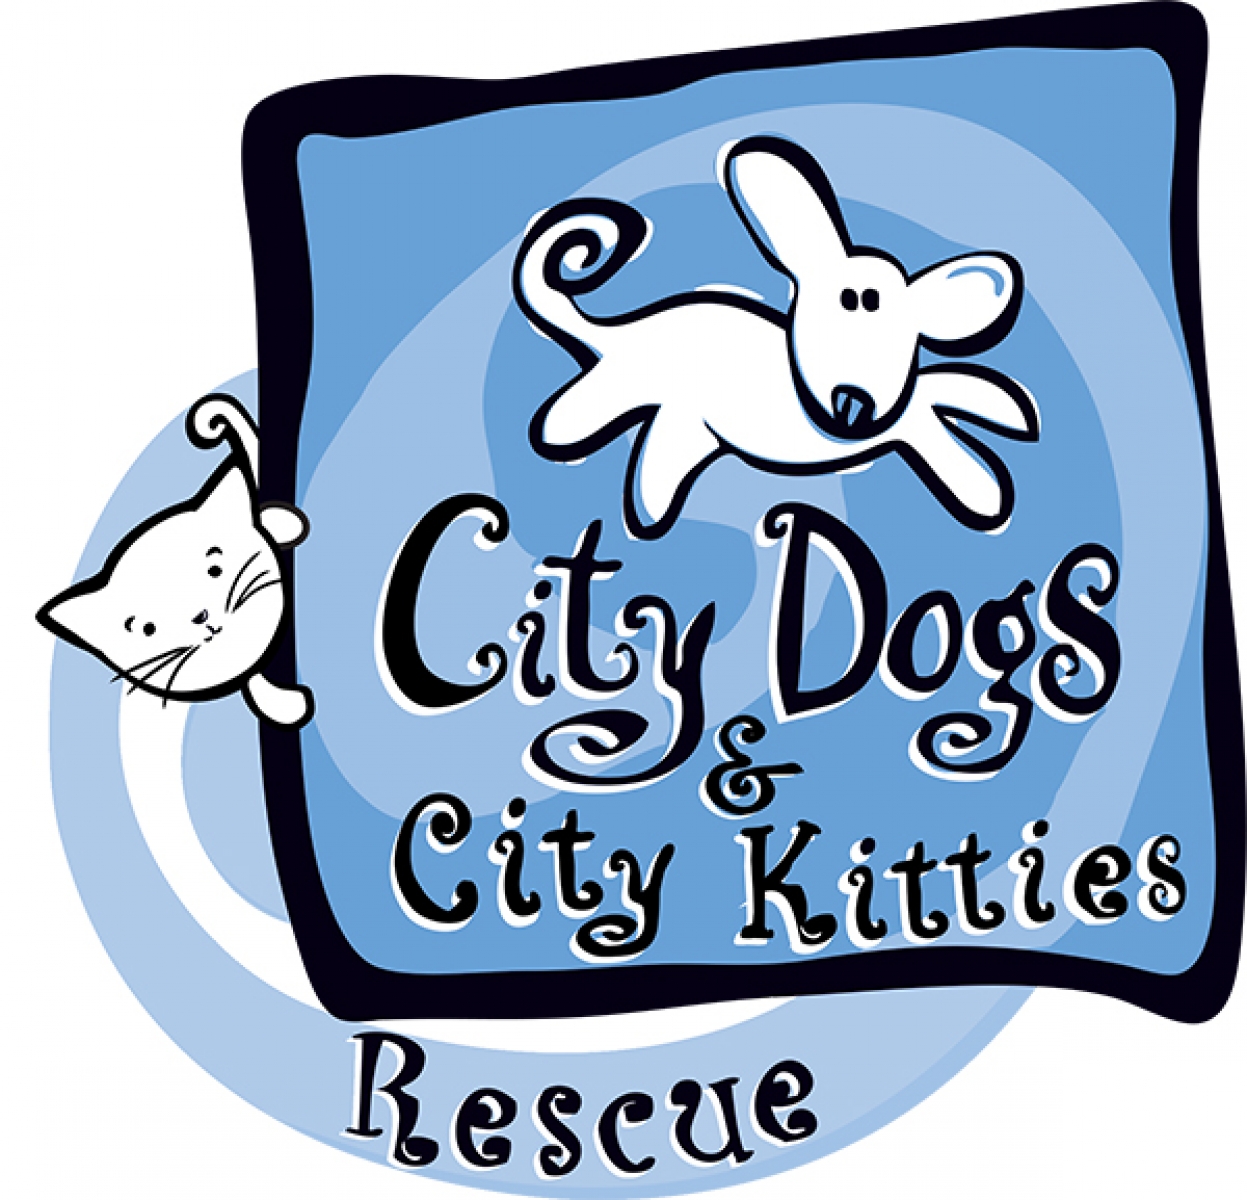 City Dogs Rescue eCards